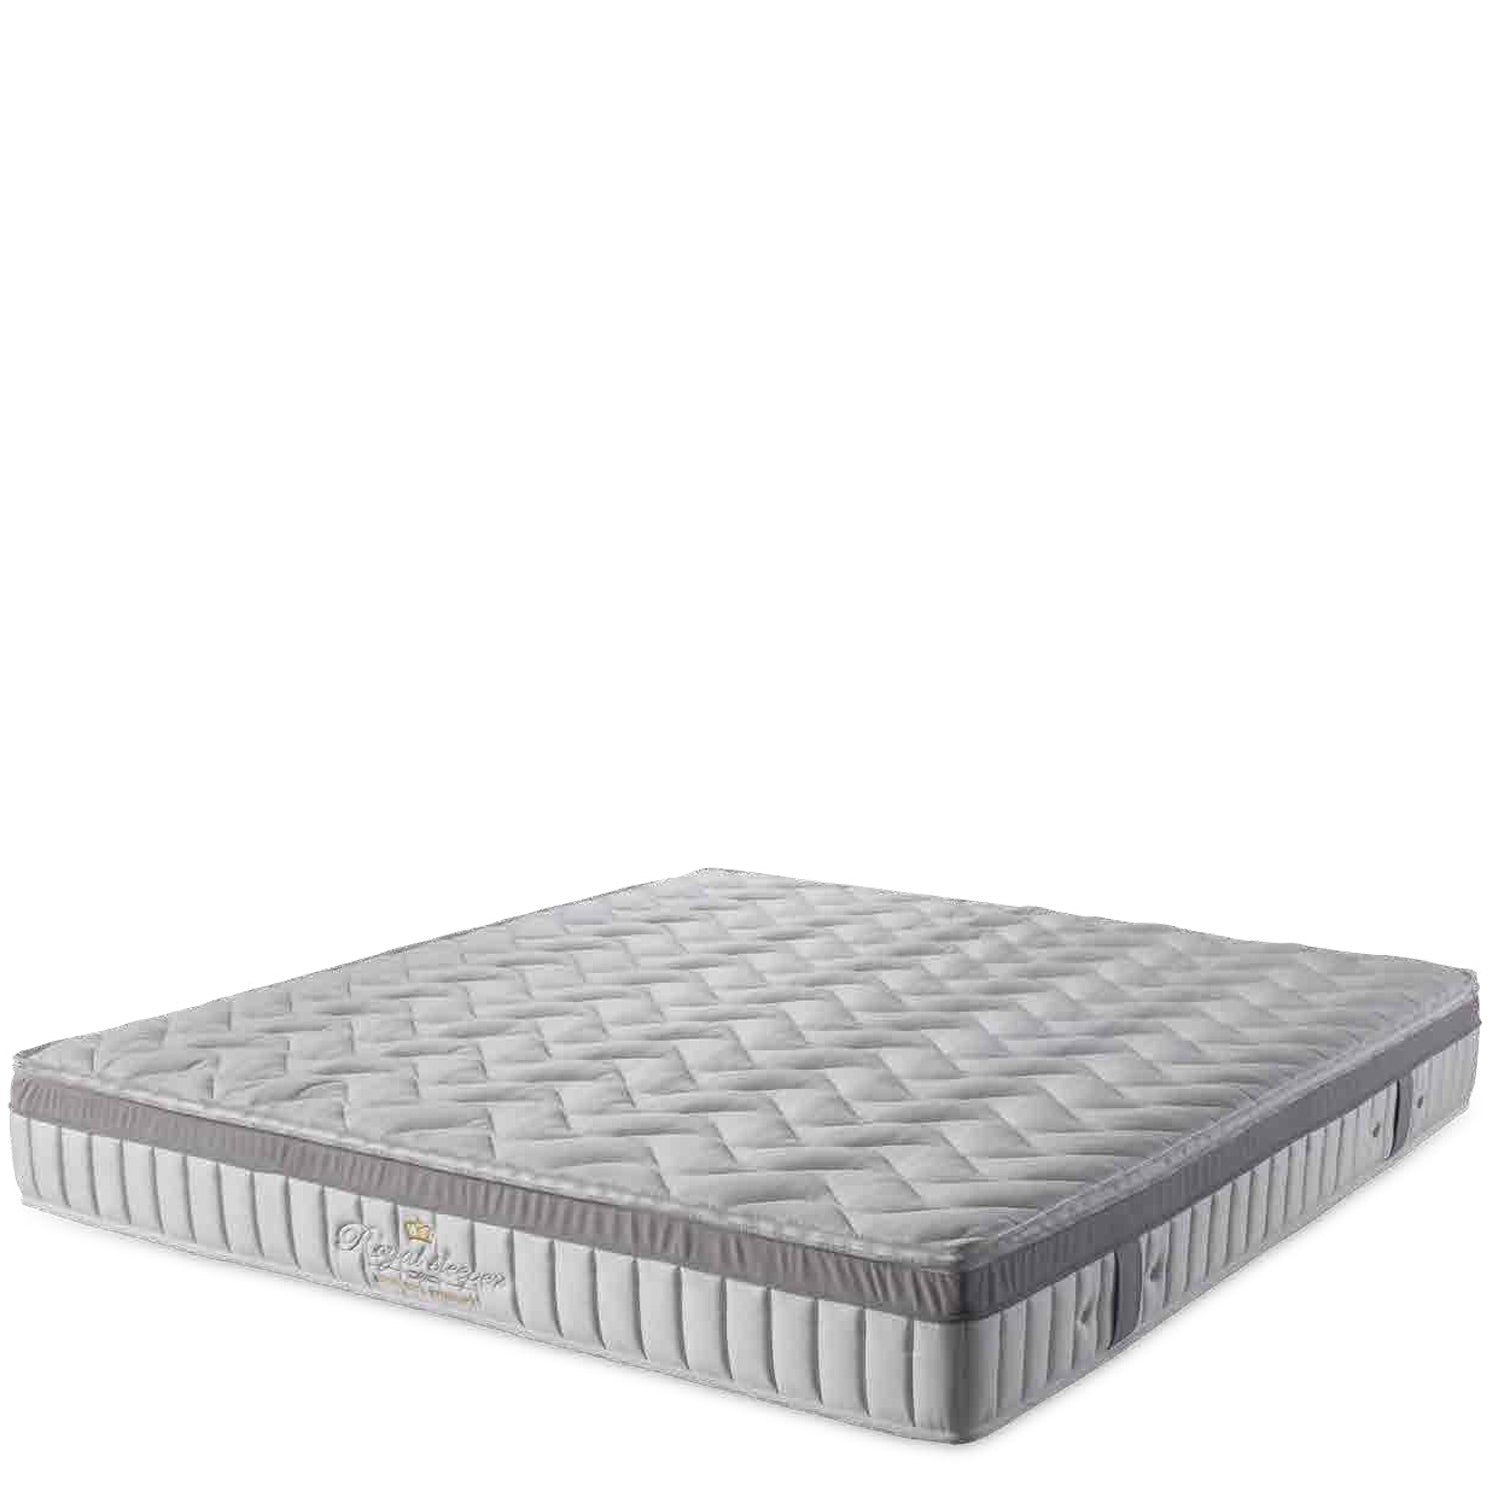 Hereford mattress